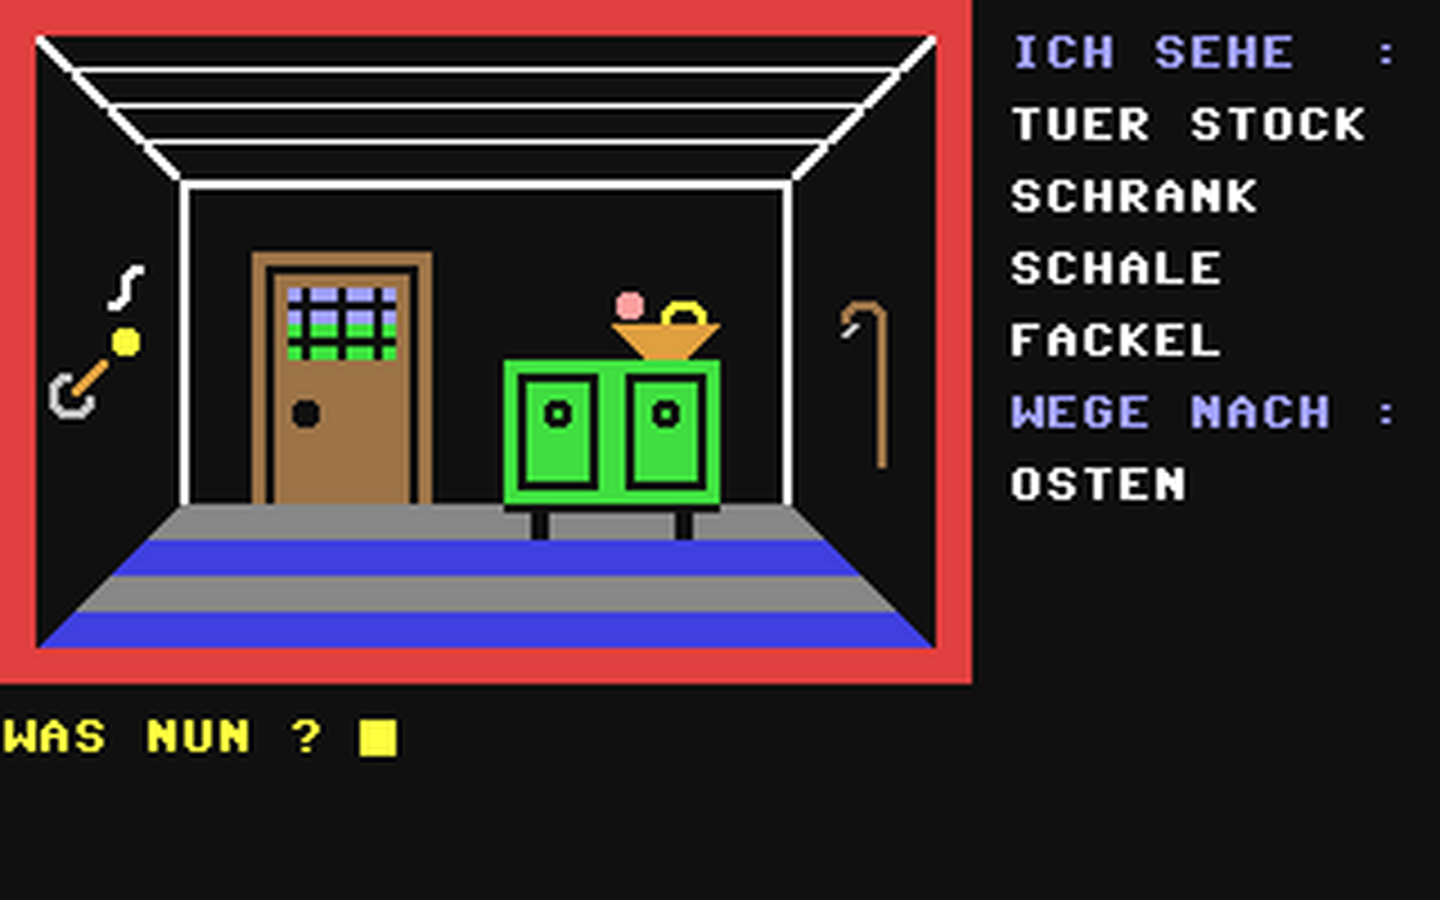 C64 GameBase Maya-Grab,_Das Verlag_Heinz_Heise_GmbH/Input_64 1986